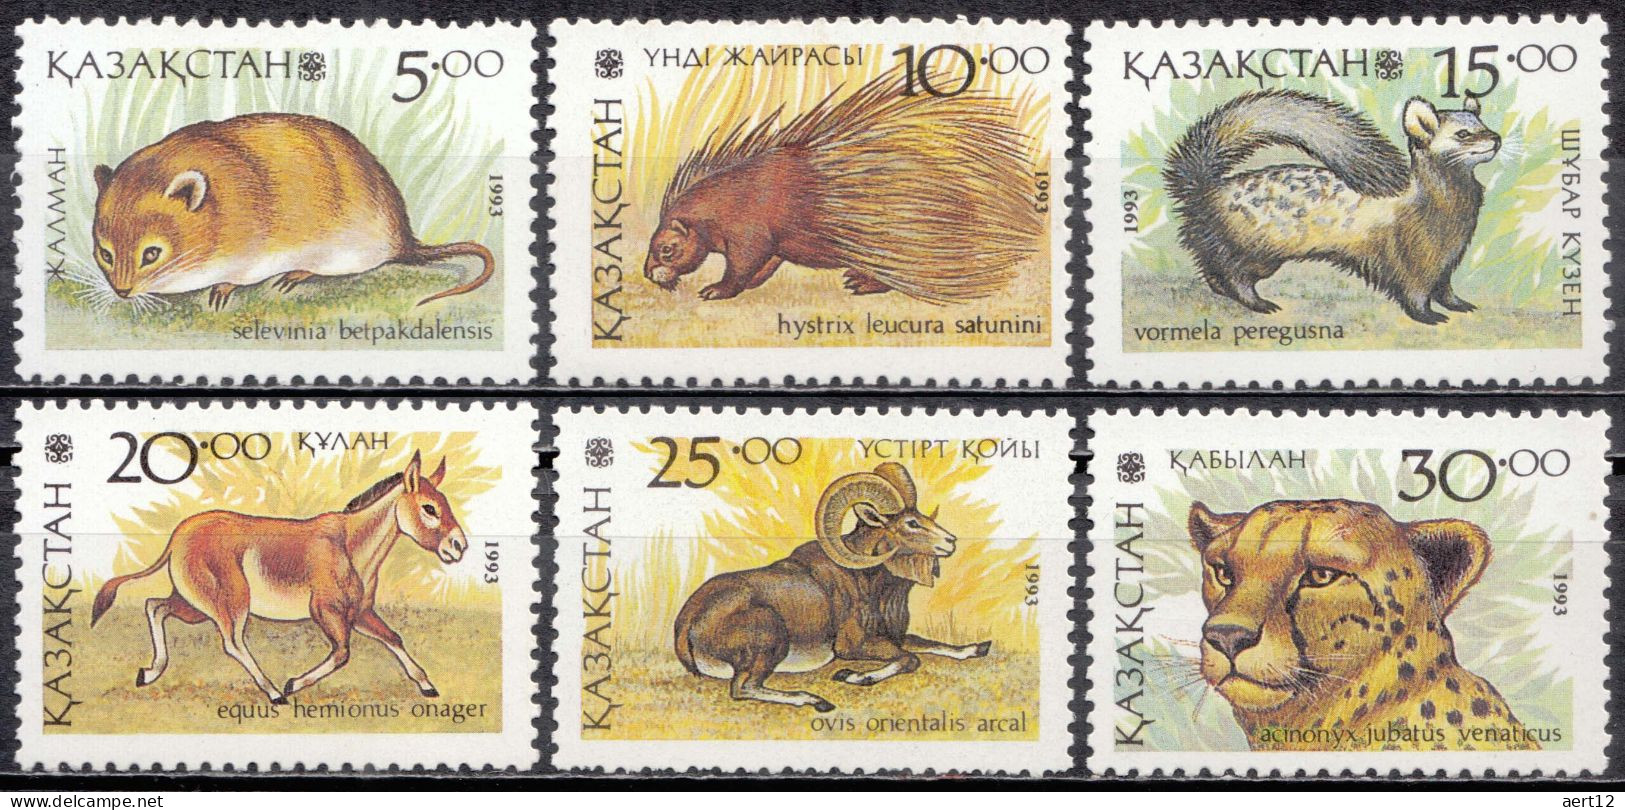 1993, Kazakhstan, Fauna, Cheetahs, Donkeys, Dormice, Porcupines, Rodents, Sheep, 6 Stamps, MNH(**), KZ 31-36 - Kazakhstan